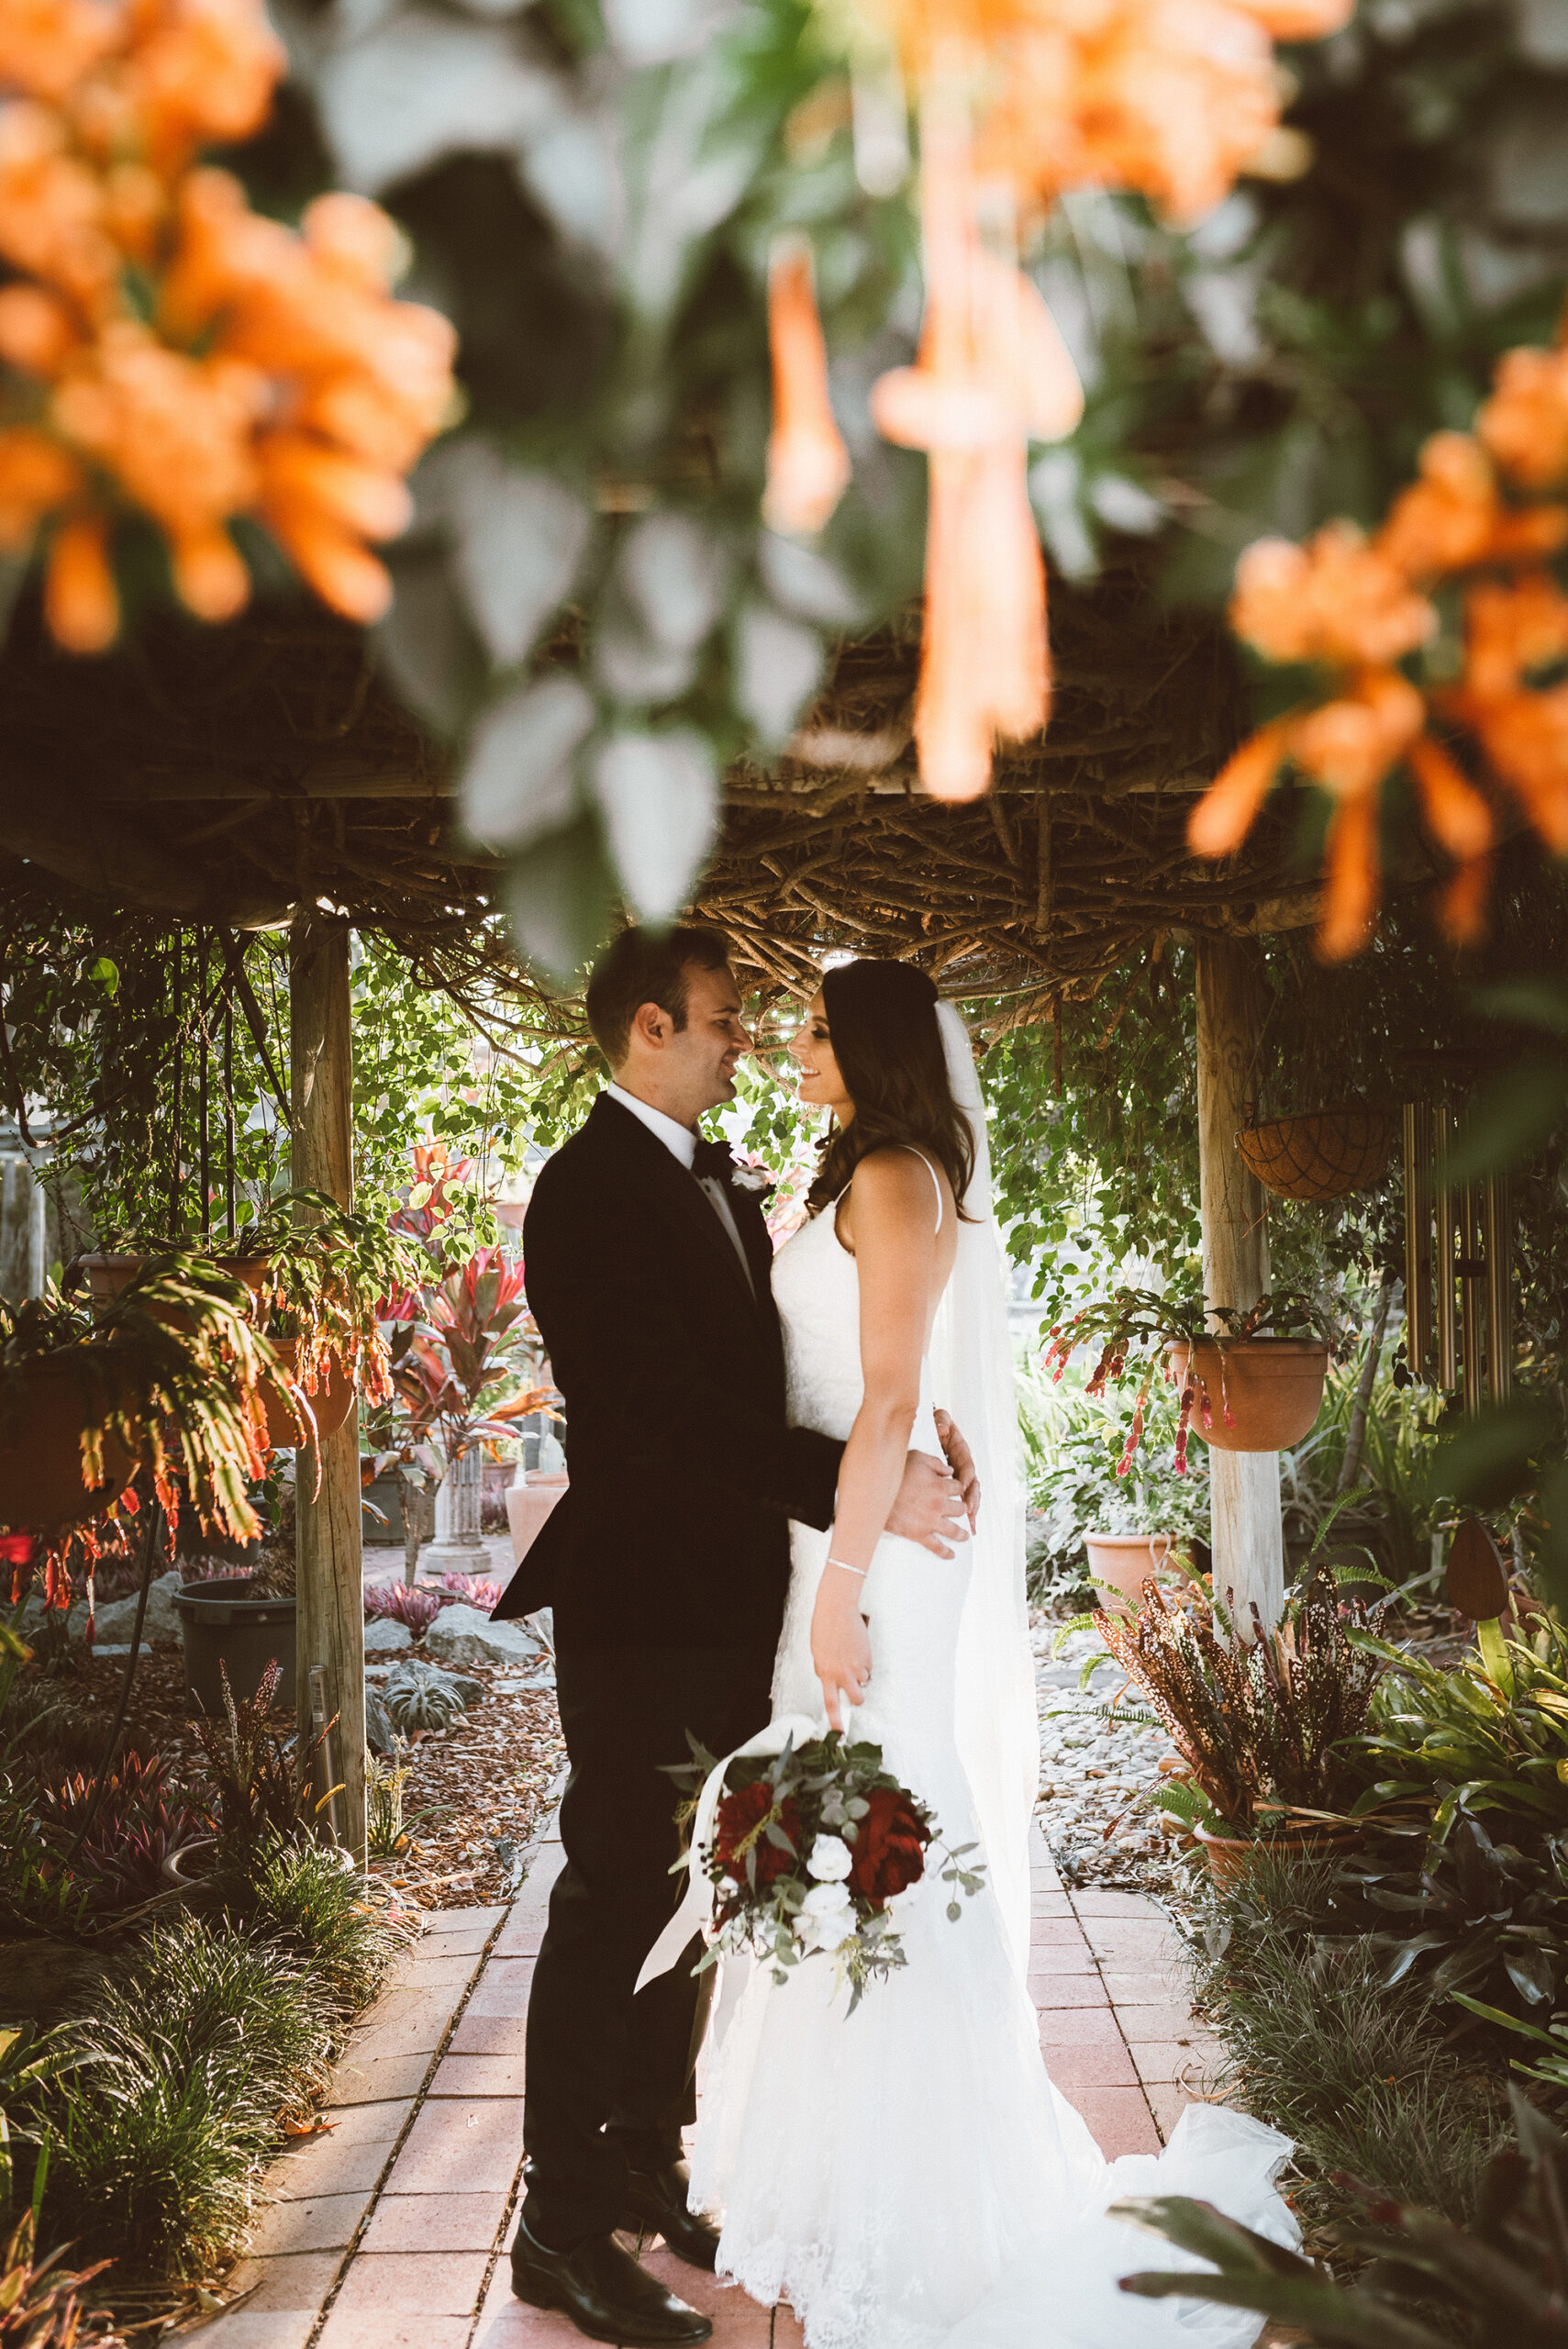 Sara_Frank_Romantic-Garden-Wedding_The-Raw-Photographer_026